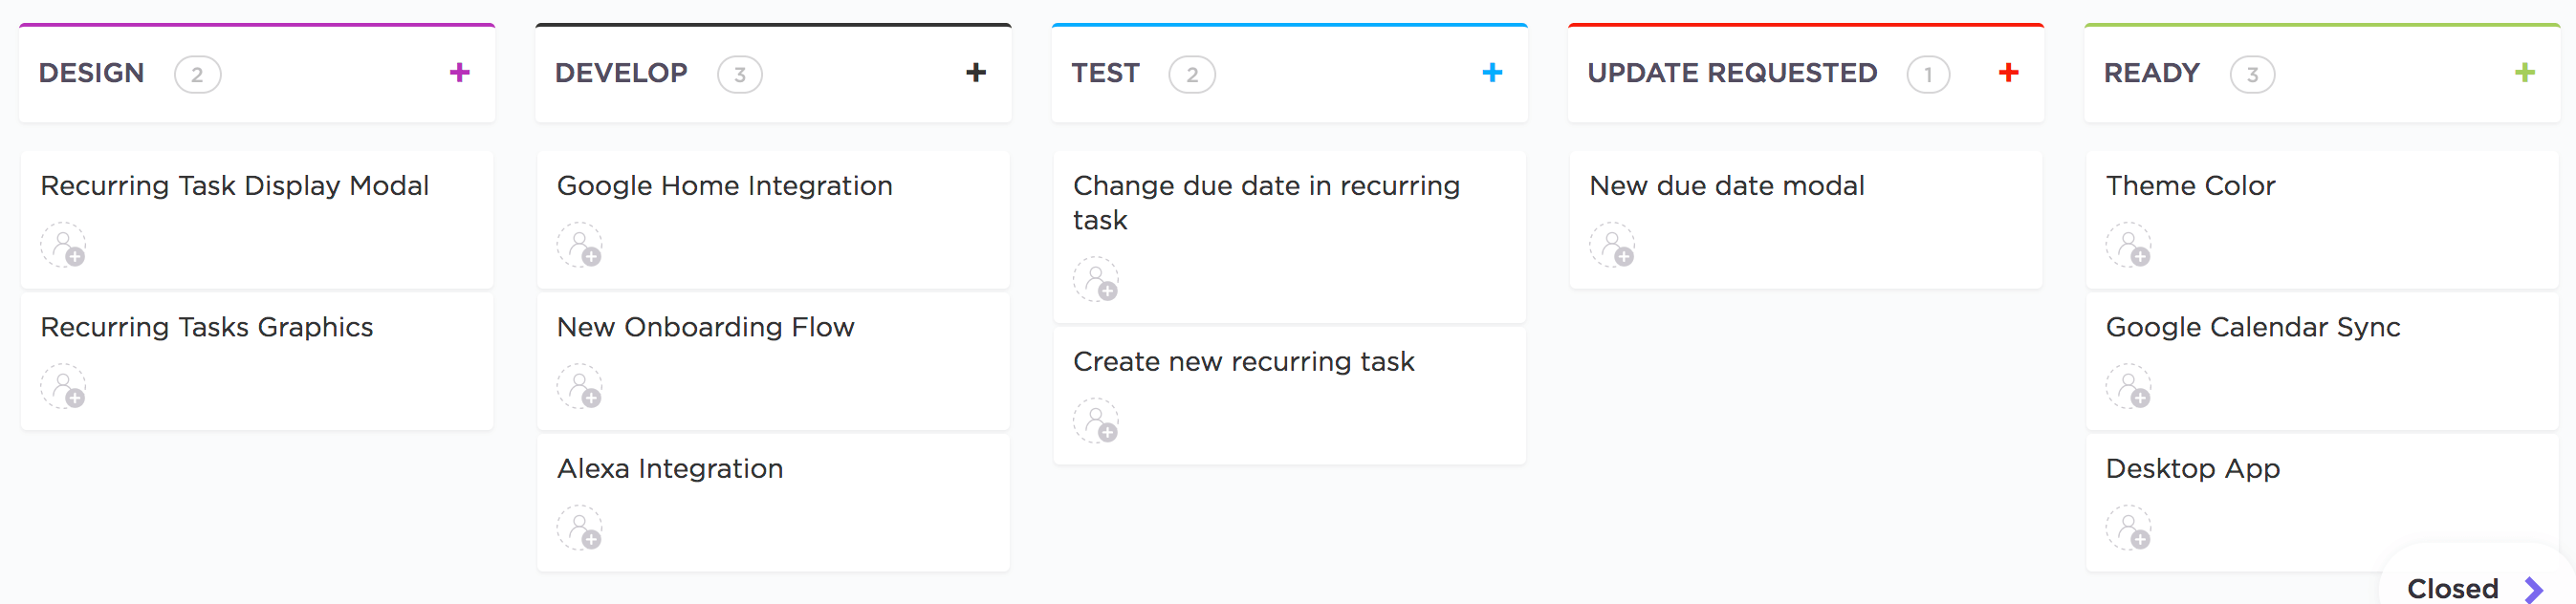 ClickUp custom task statuses